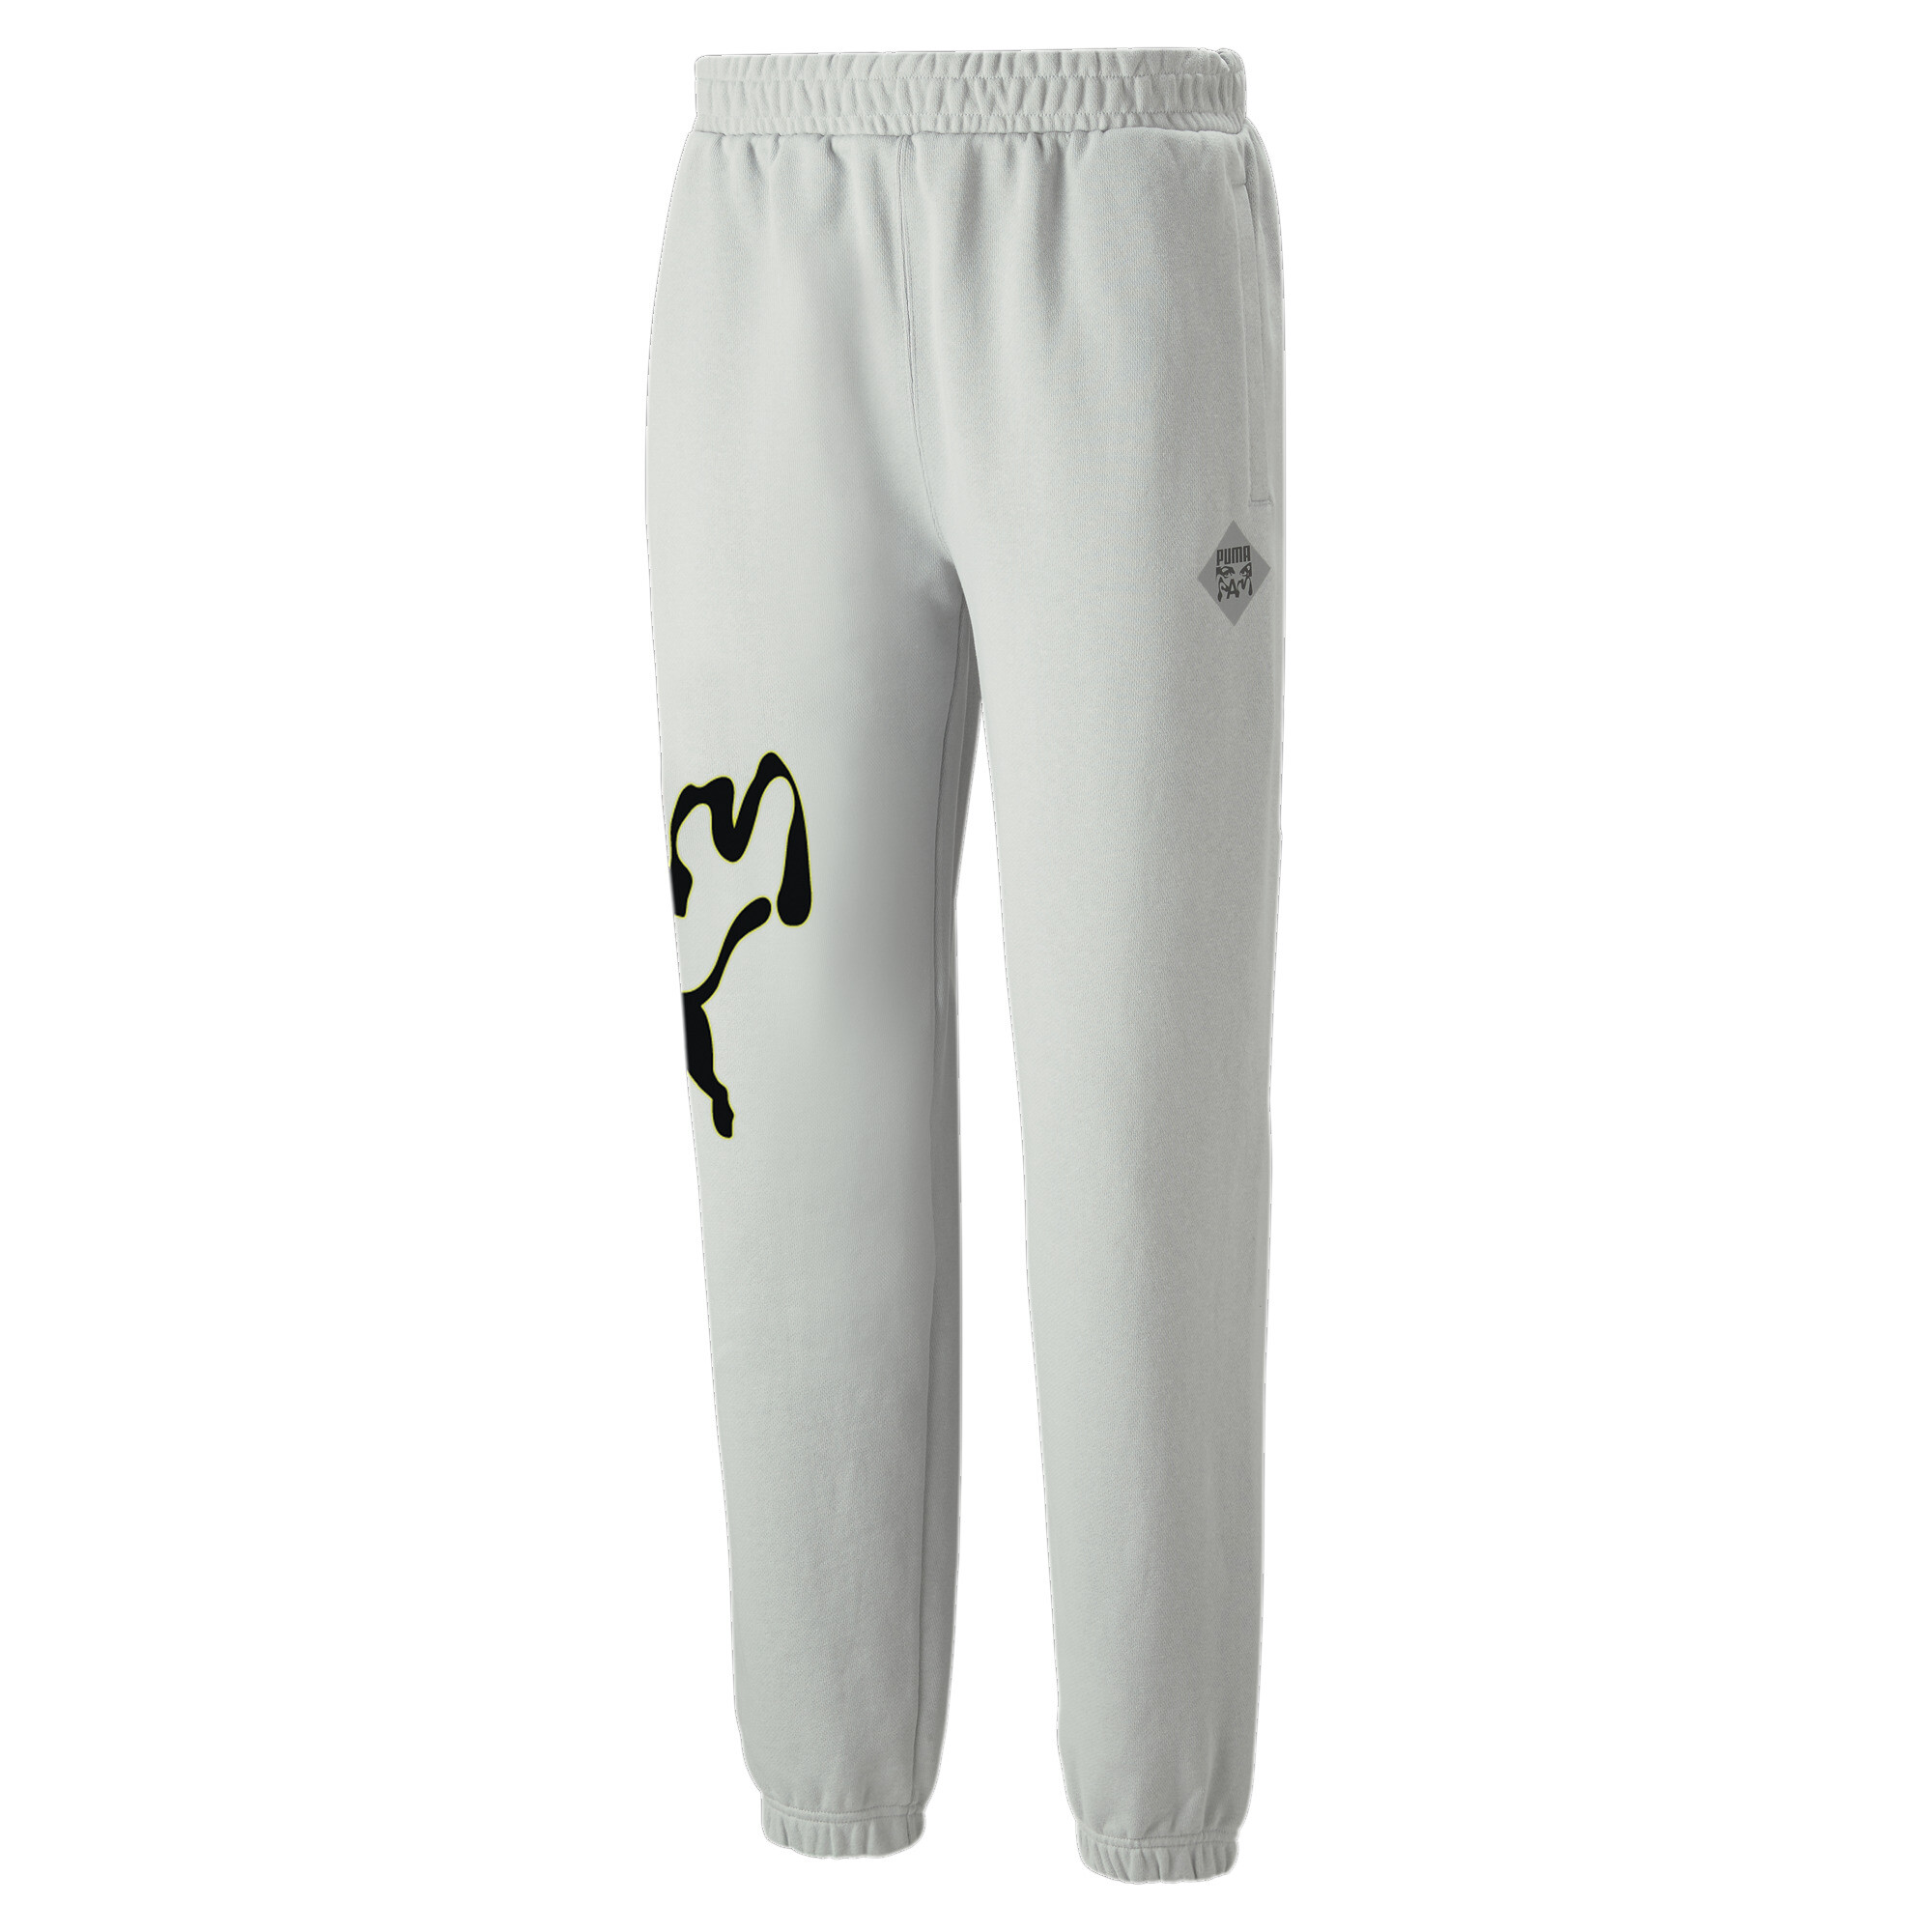 Men's PUMA X PERKS AND MINI Graphic Sweatpants In Gray, Size XS